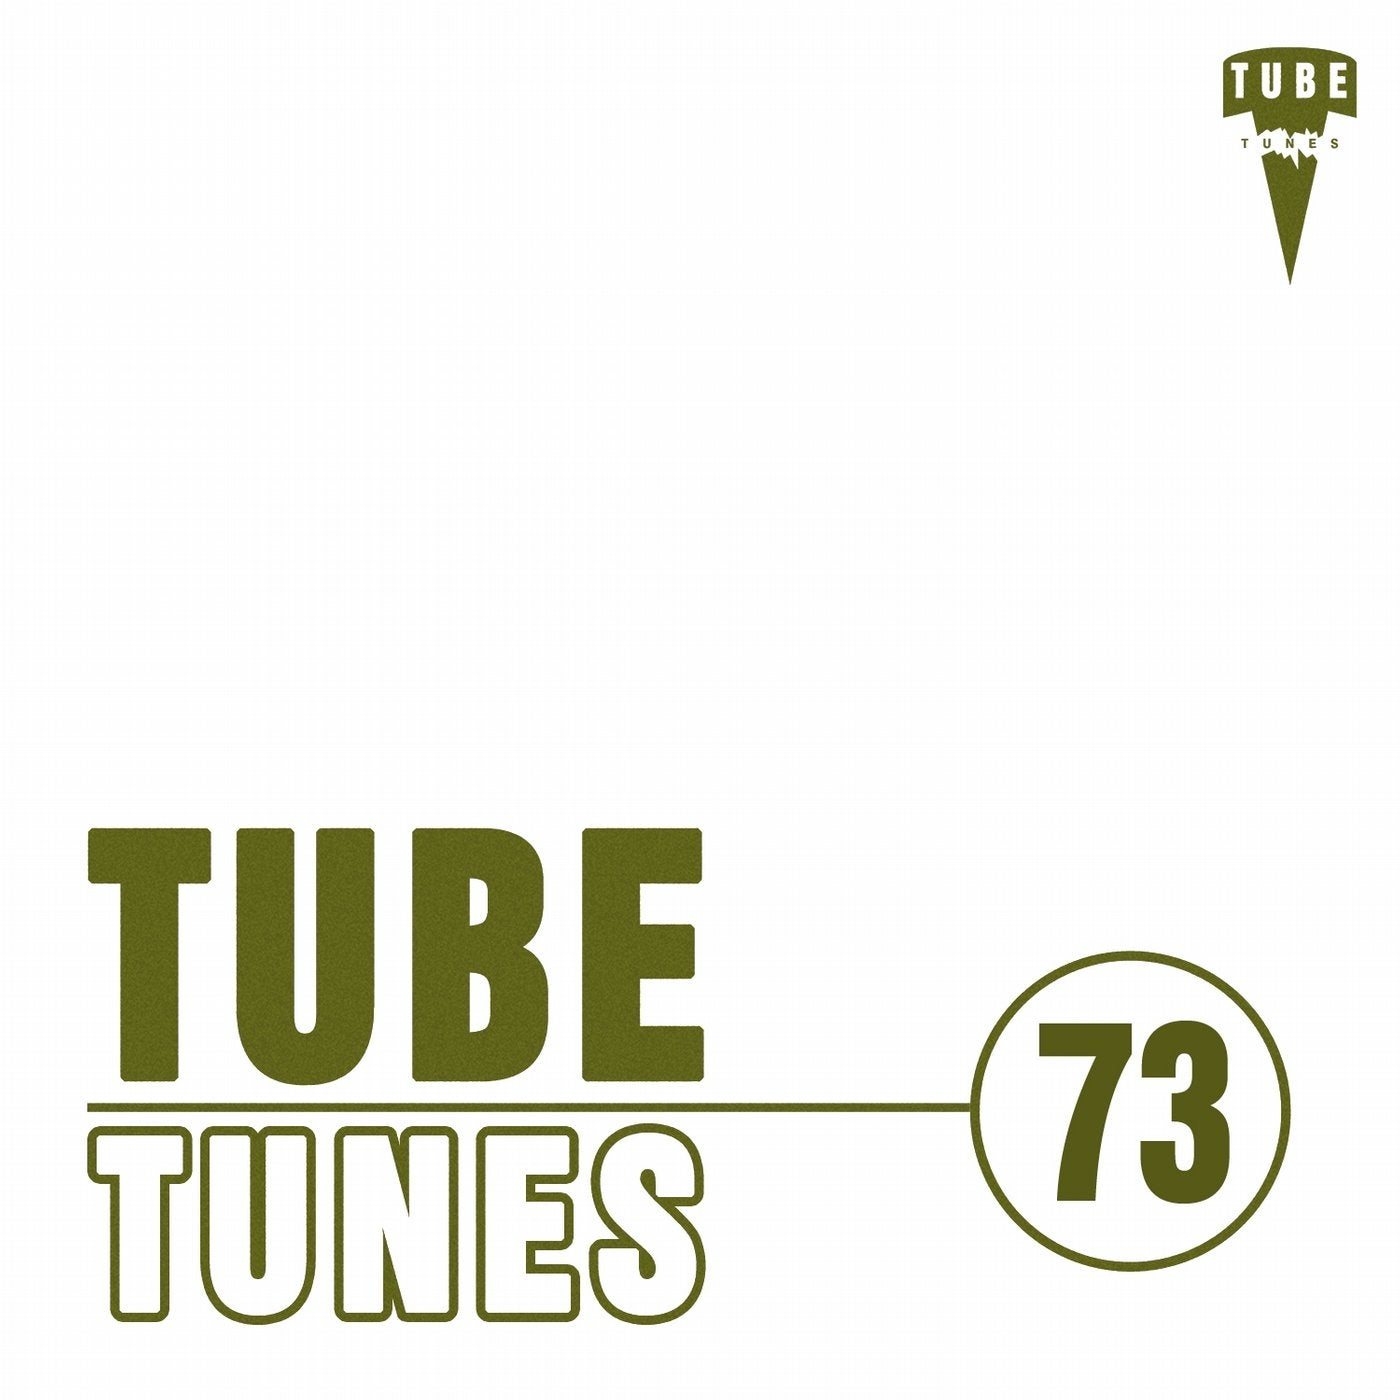 Tube Tunes, Vol. 73